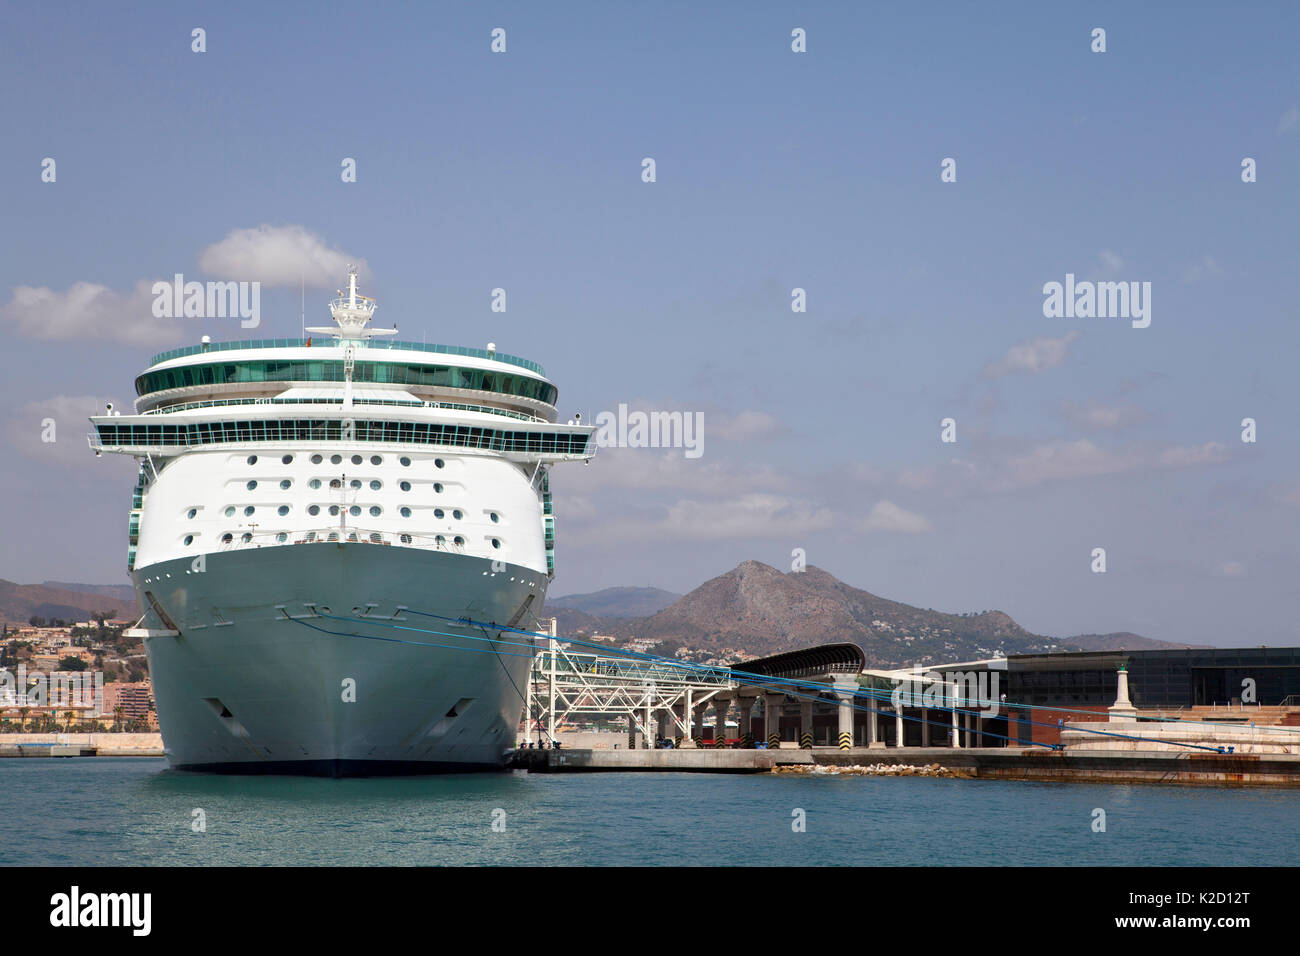 Royal Caribbean Navigator of the Seas, voyager class cruise ship docked at Malaga, Spain in the Mediterranean Stock Photo